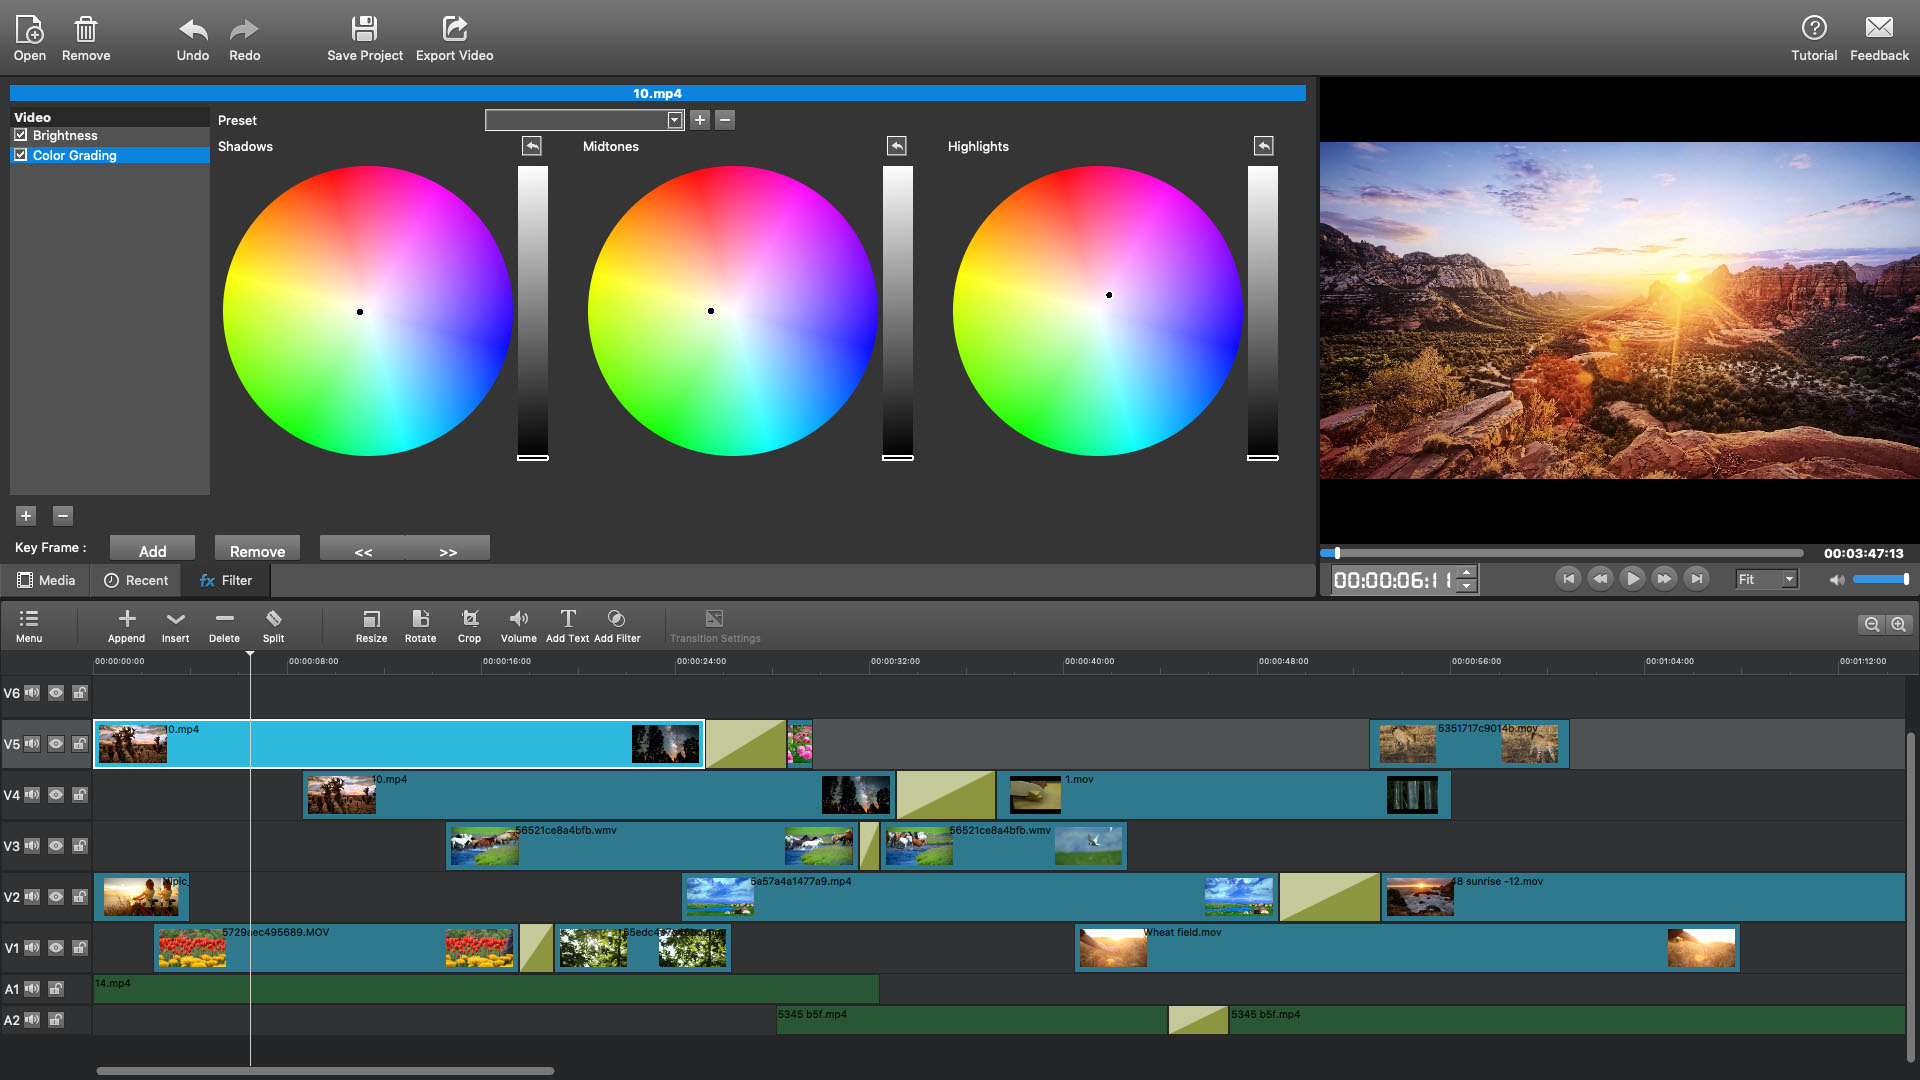 MovieMator Video Editor Pro - Movie Maker, Video Editing Software - Win/Mac - (Steam)